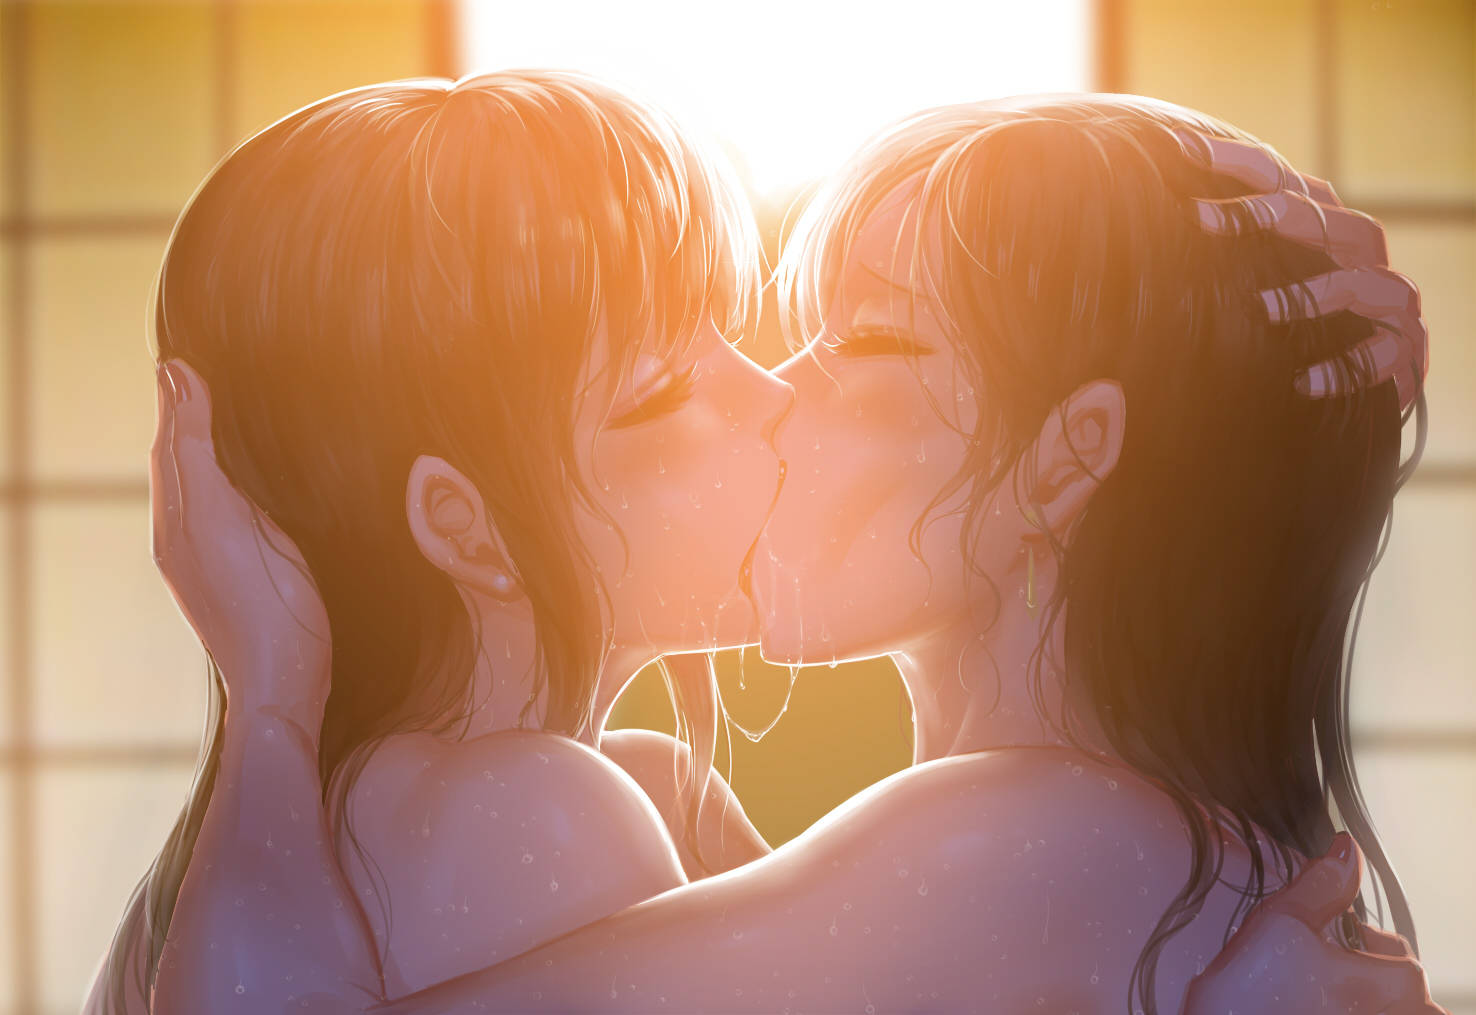 Anime kissing lesbian